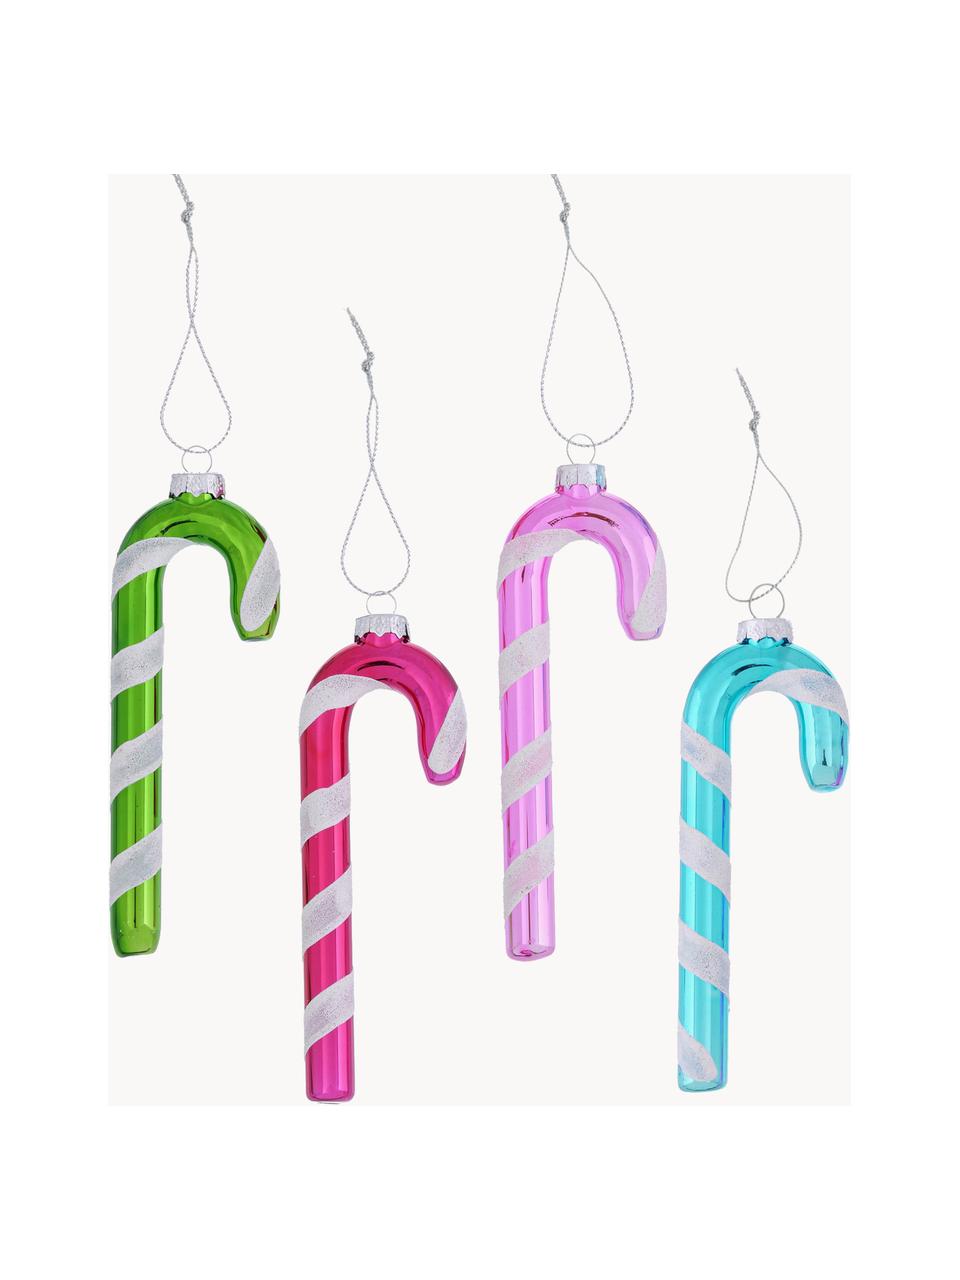 Kerstboomhangers Candy, set van 4, Gelakt glas, Groen, blauw, roze, B 4 x H 11 cm